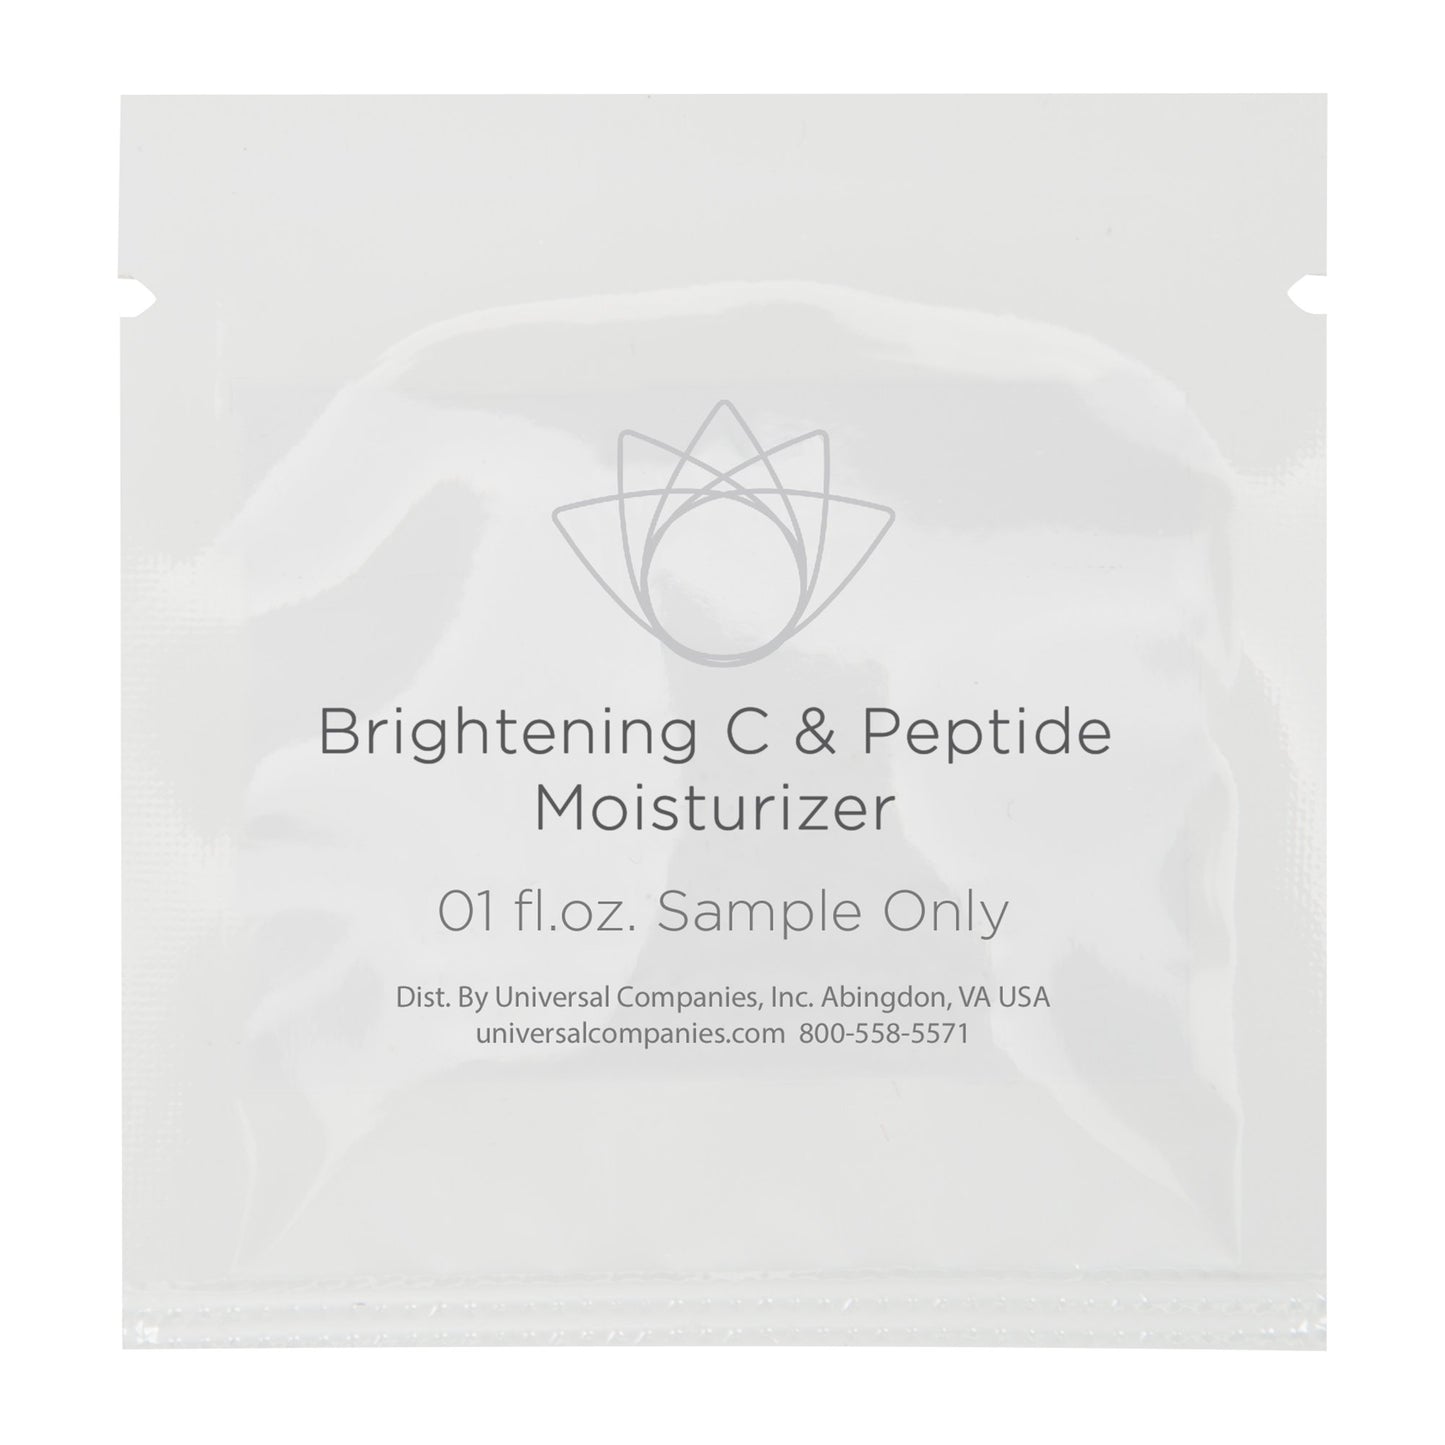 Private Label Brightening C & Peptide Moisturizer, Professional